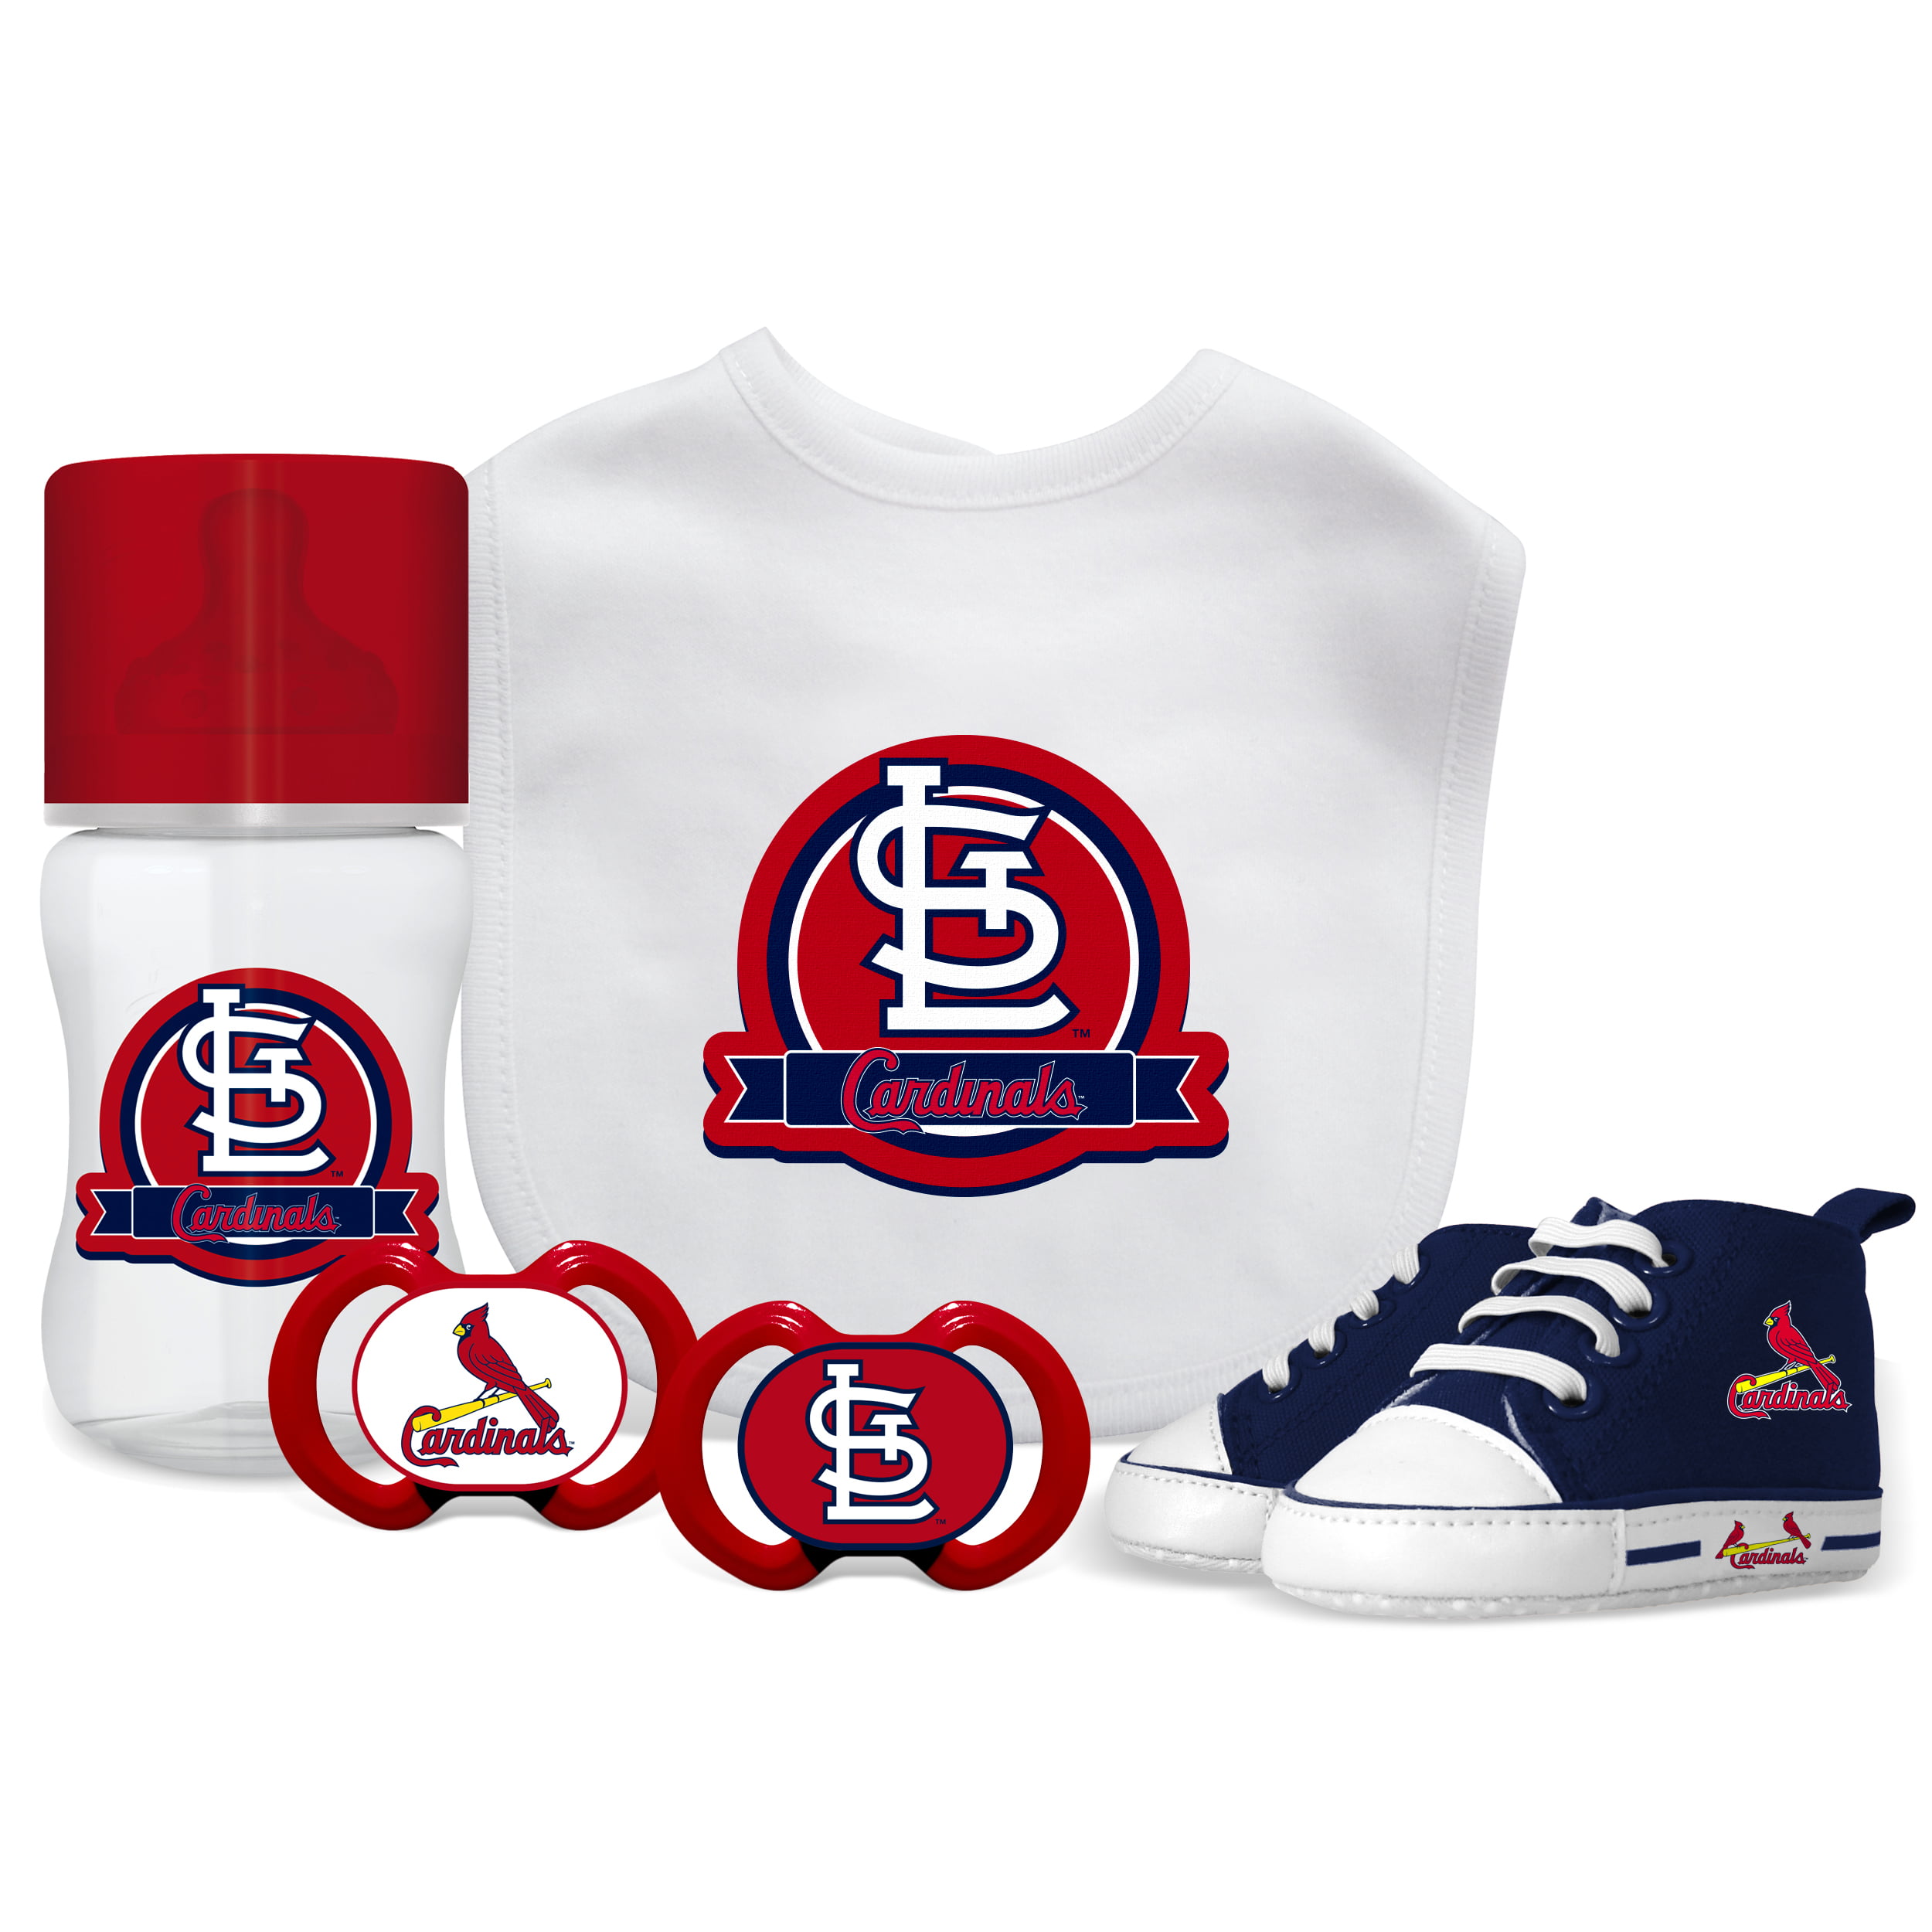 St. Louis Cardinals Baby Clothes